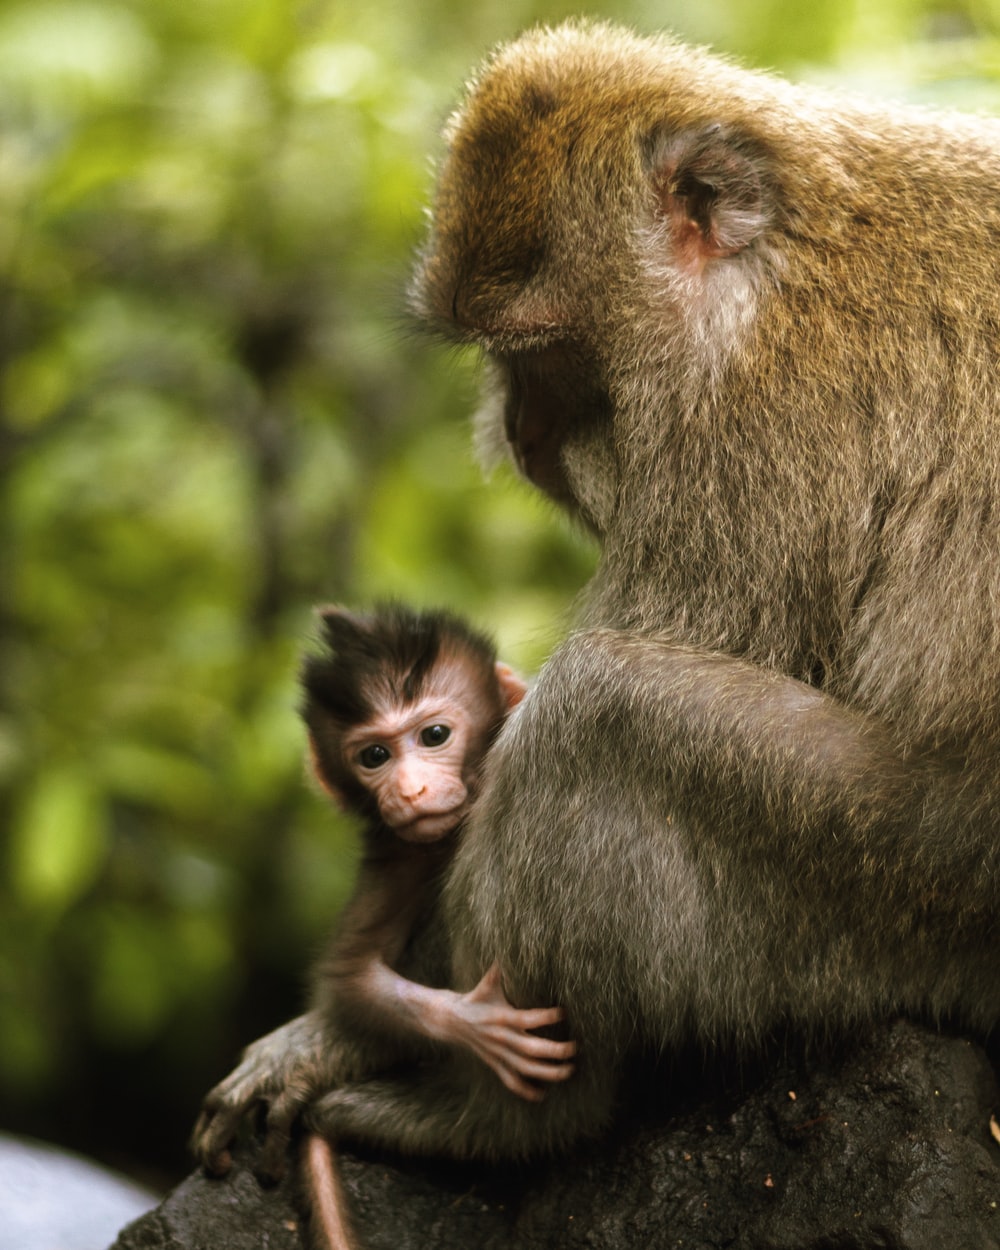 gray monkey carrying baby monkey during daytime photo